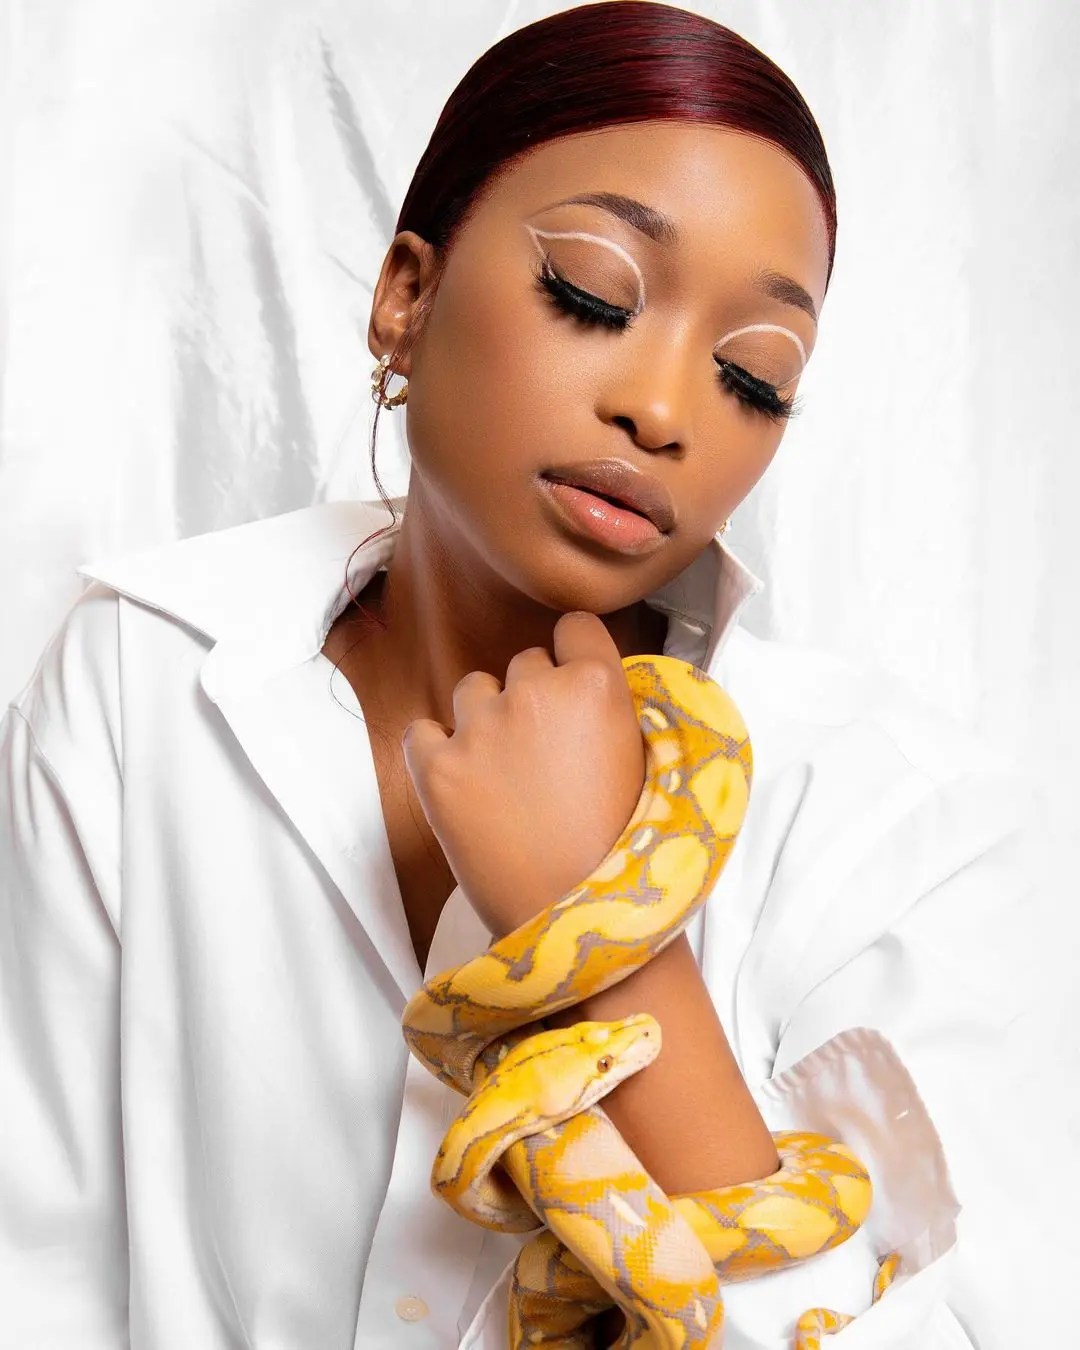 Generations: The Legacy actress Zola Nombona’s Snakes photoshoot leaves Mzansi talking